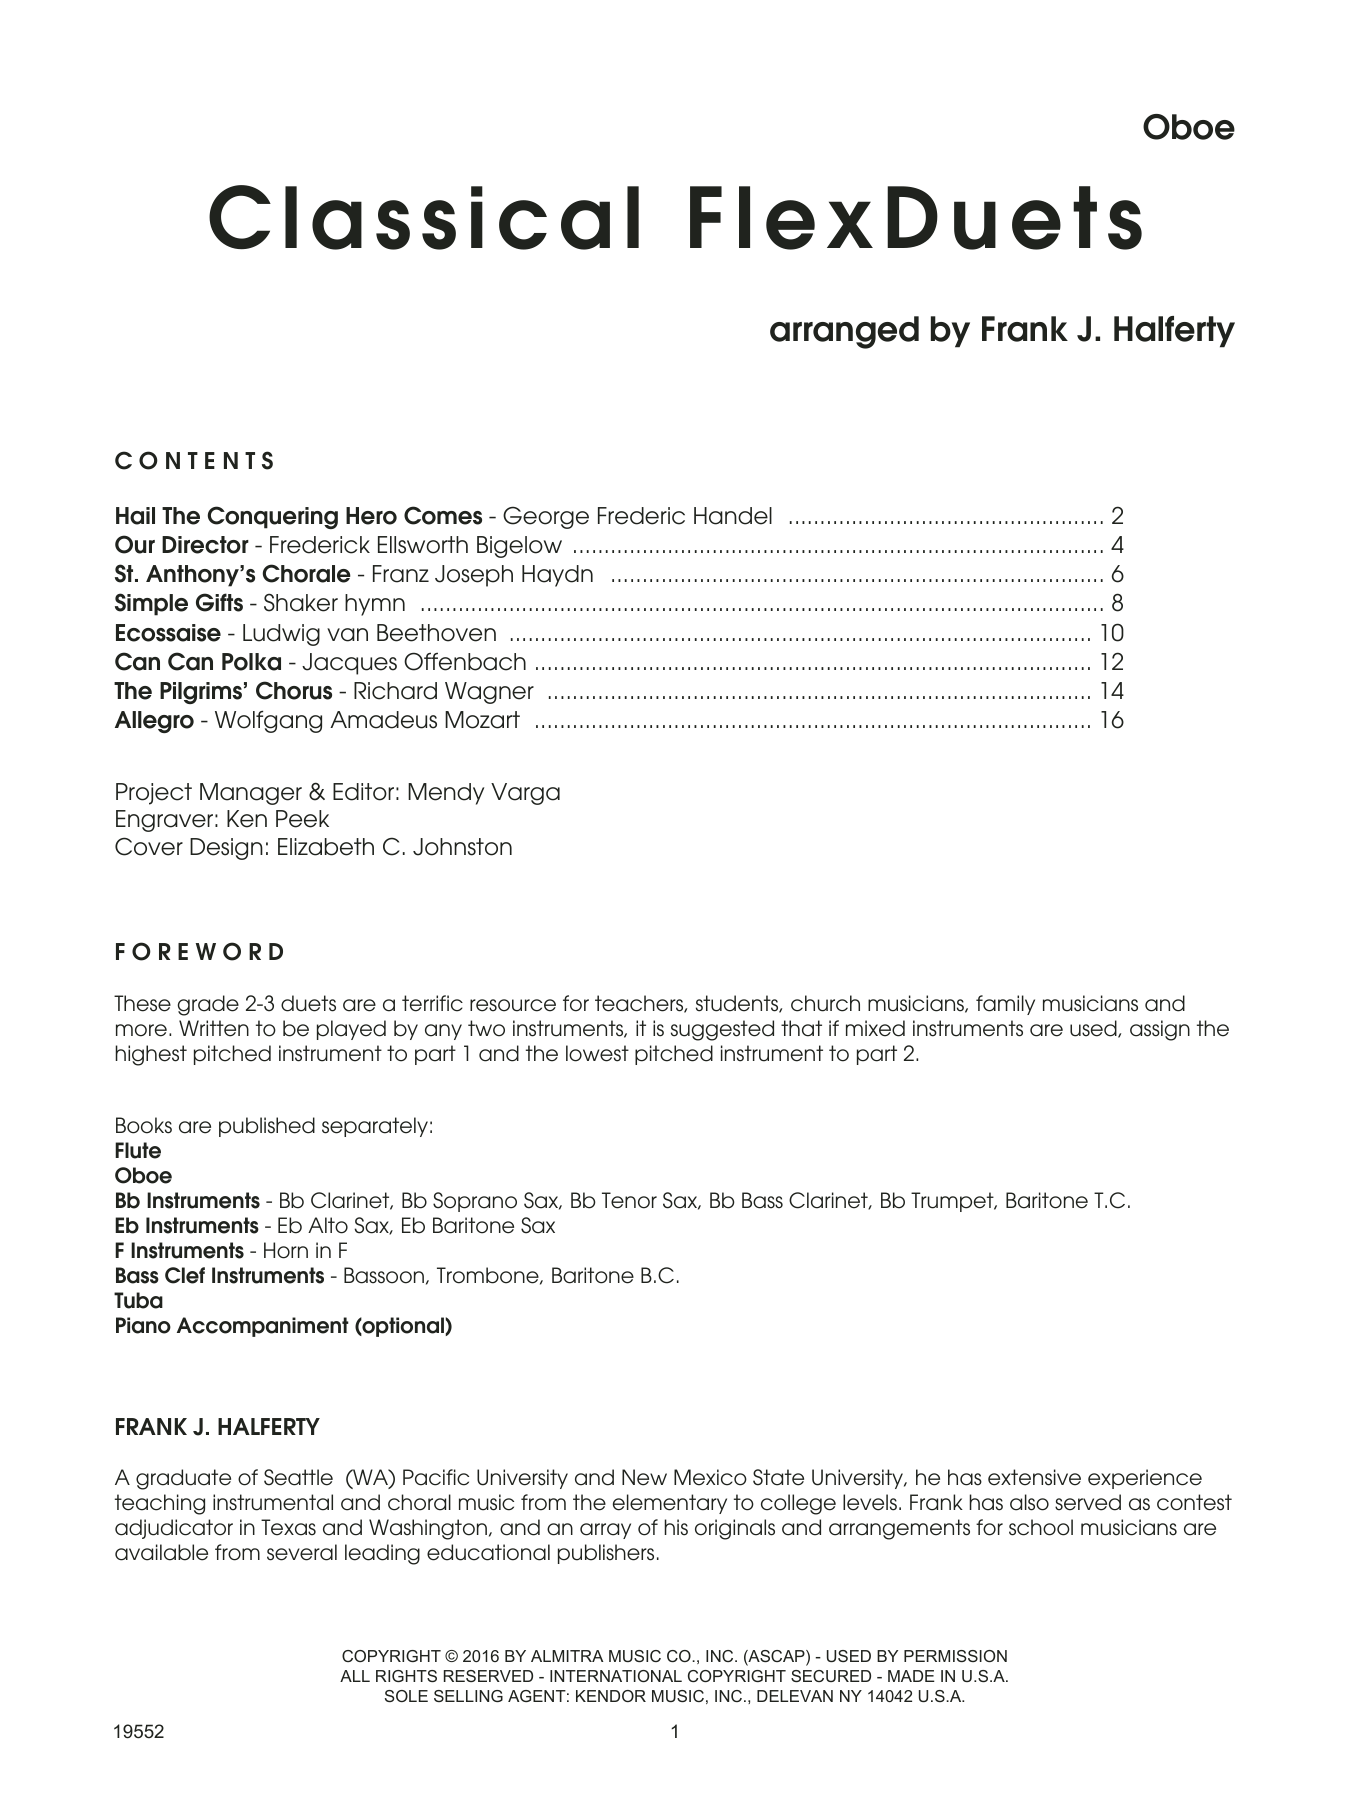 Classical FlexDuets - Oboe sheet music